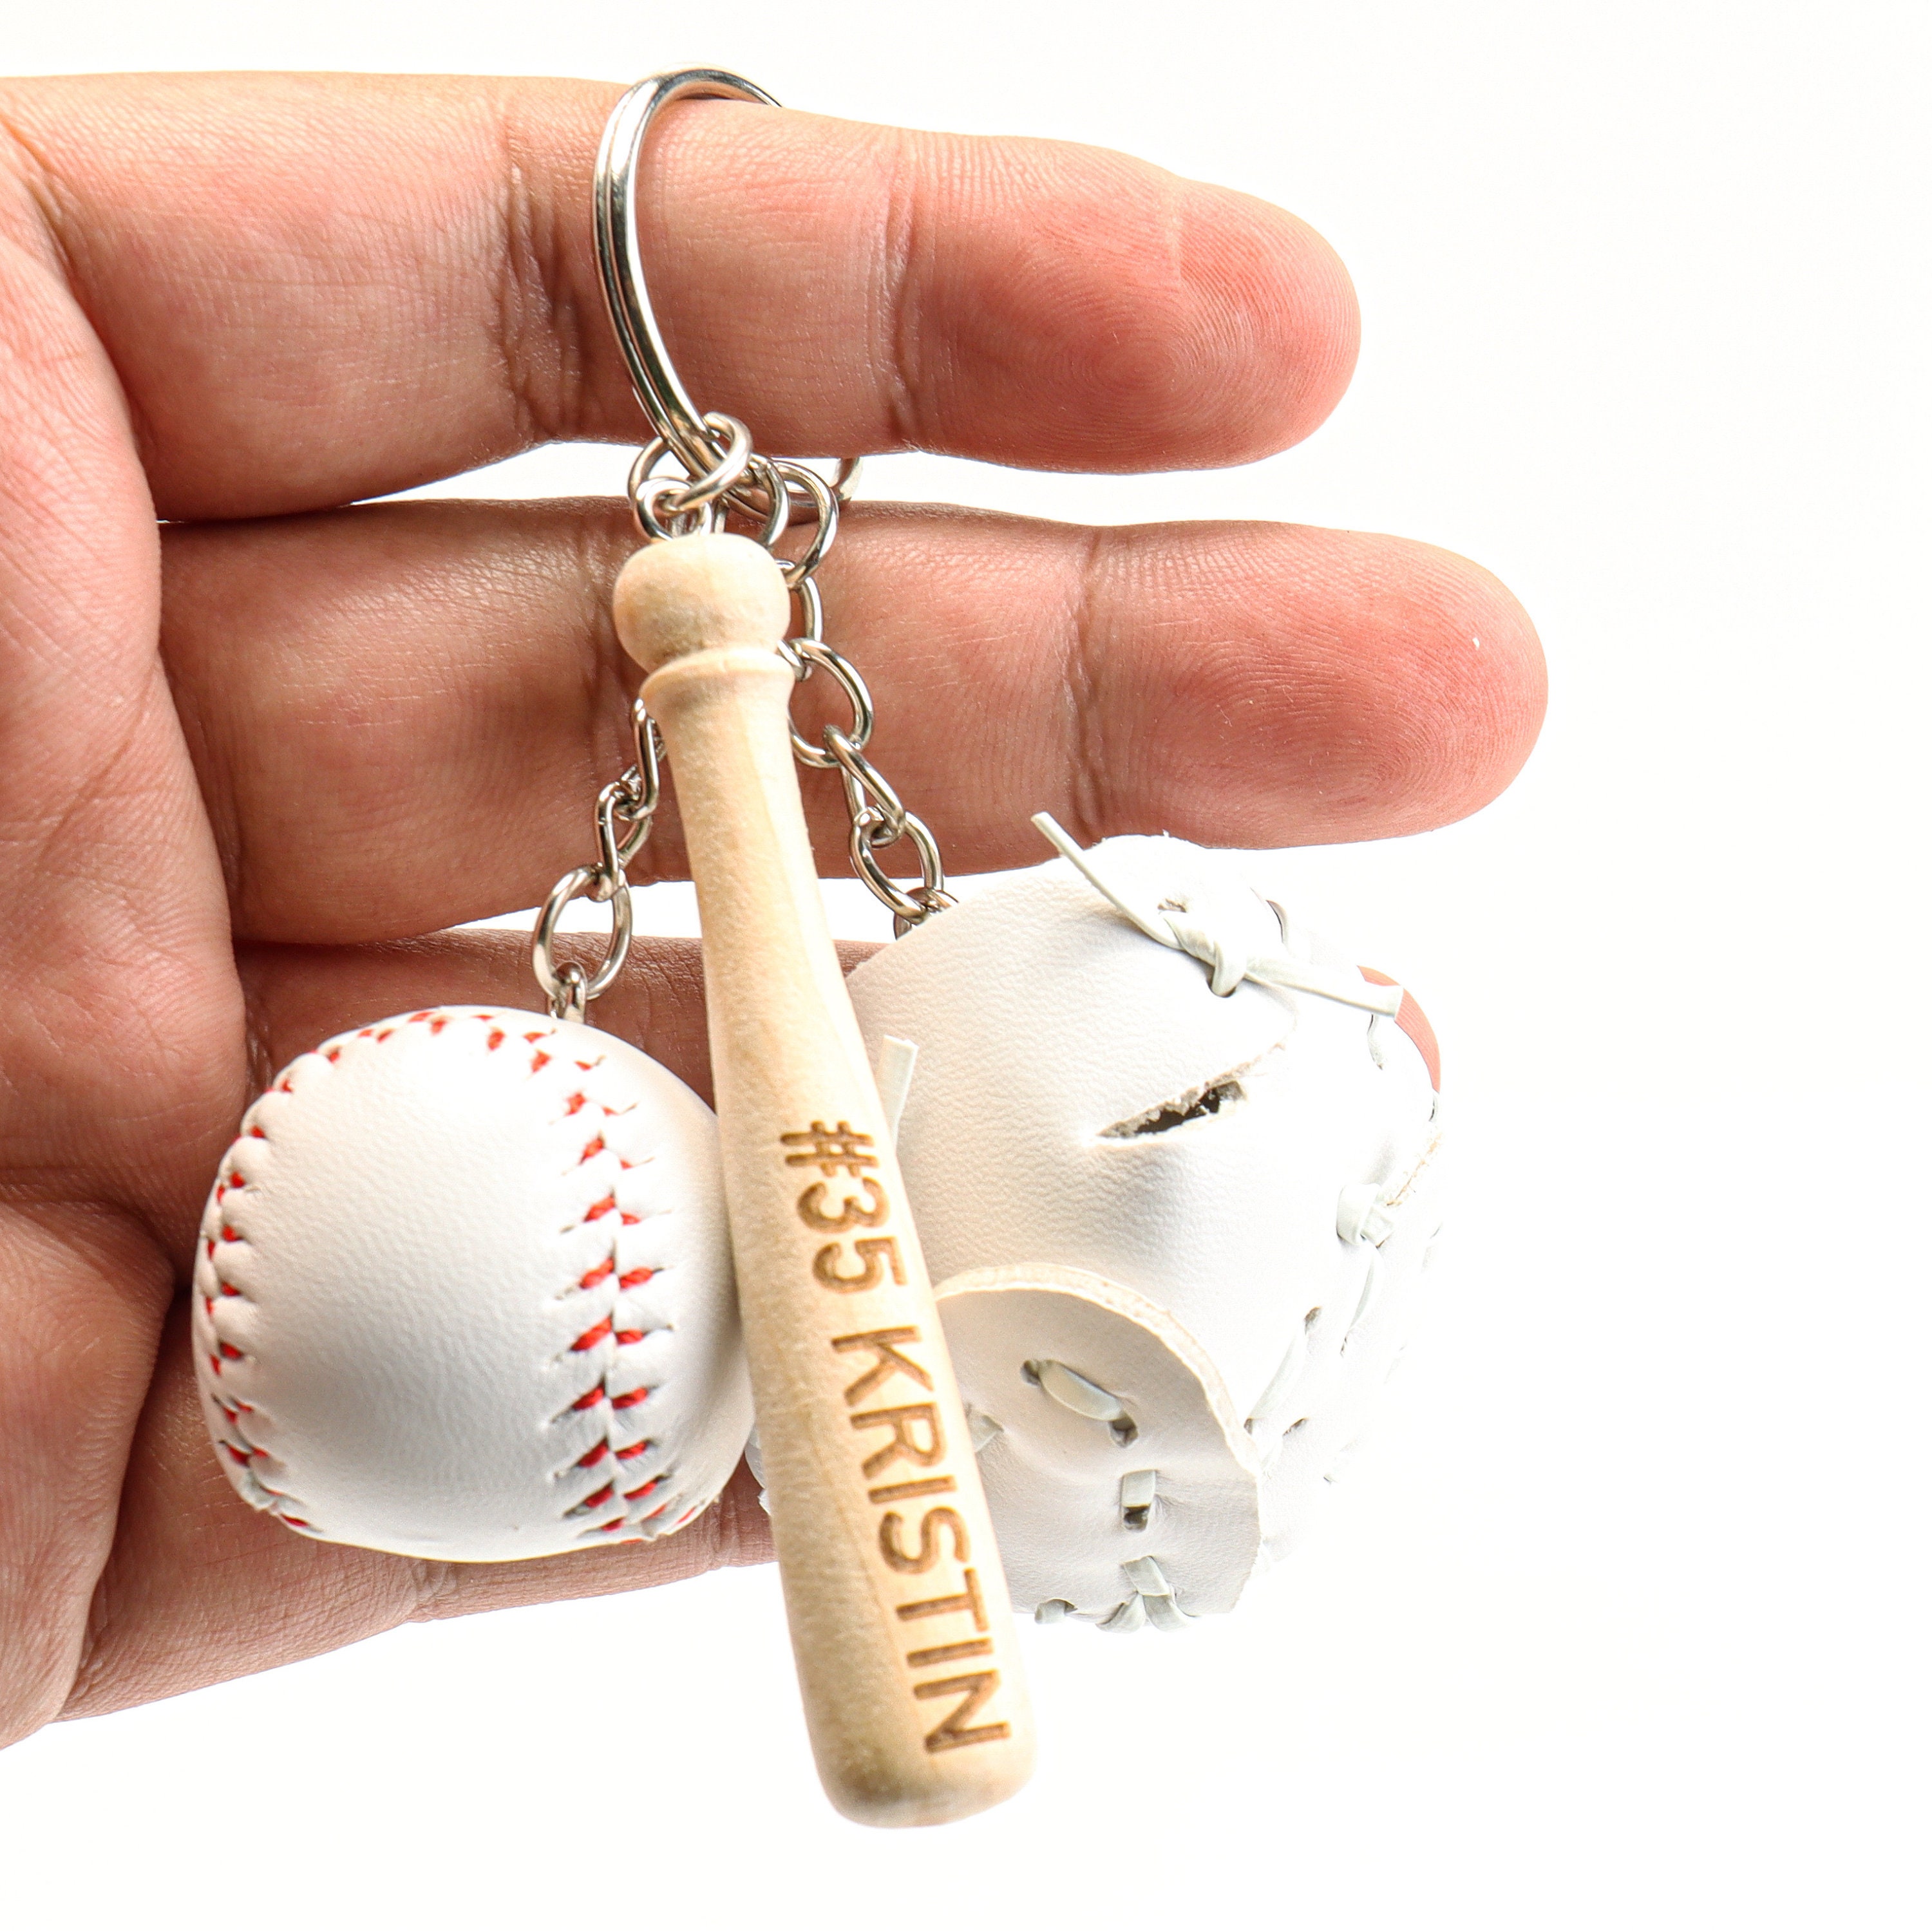 Cheap Baseball Keychains BULK PERSONALIZED, Delete | Zazzle